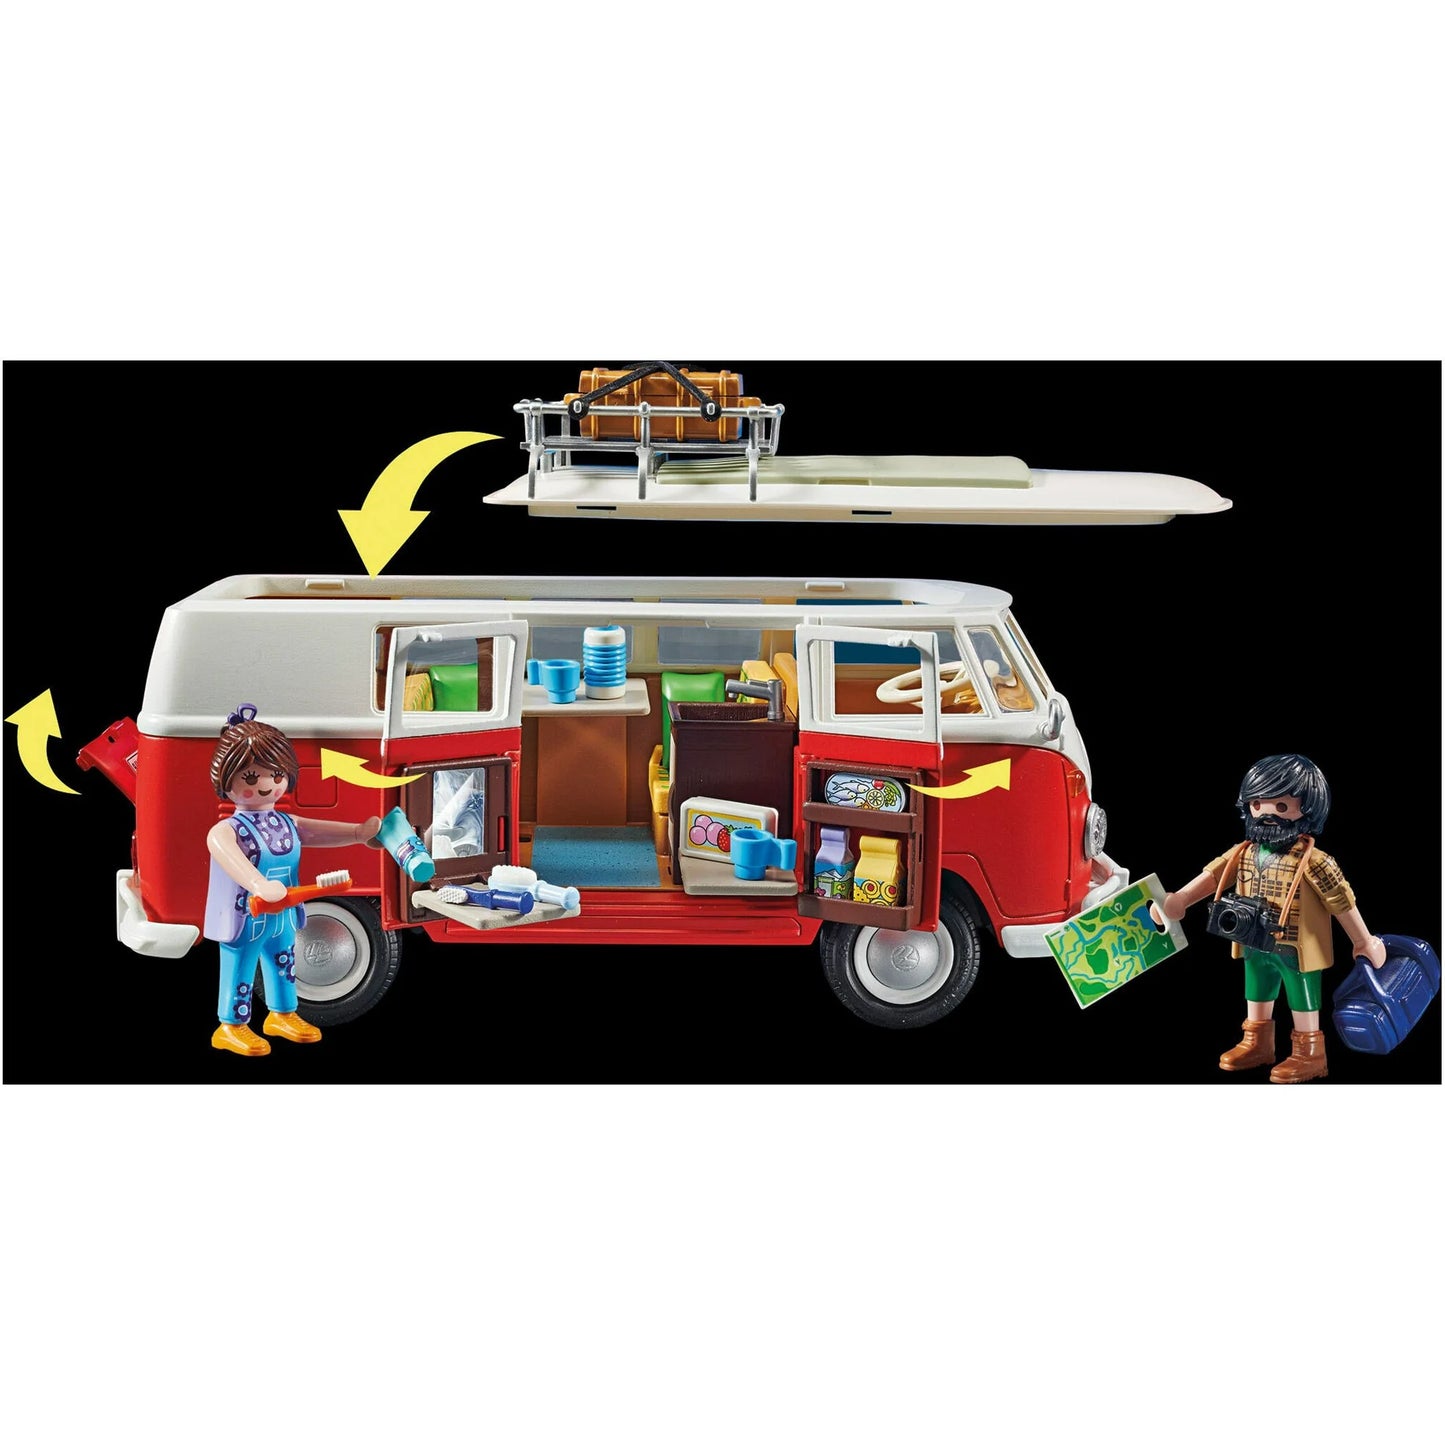 Playmobil - Volkswagen T1 Camping Bus - 74pcs - 70176